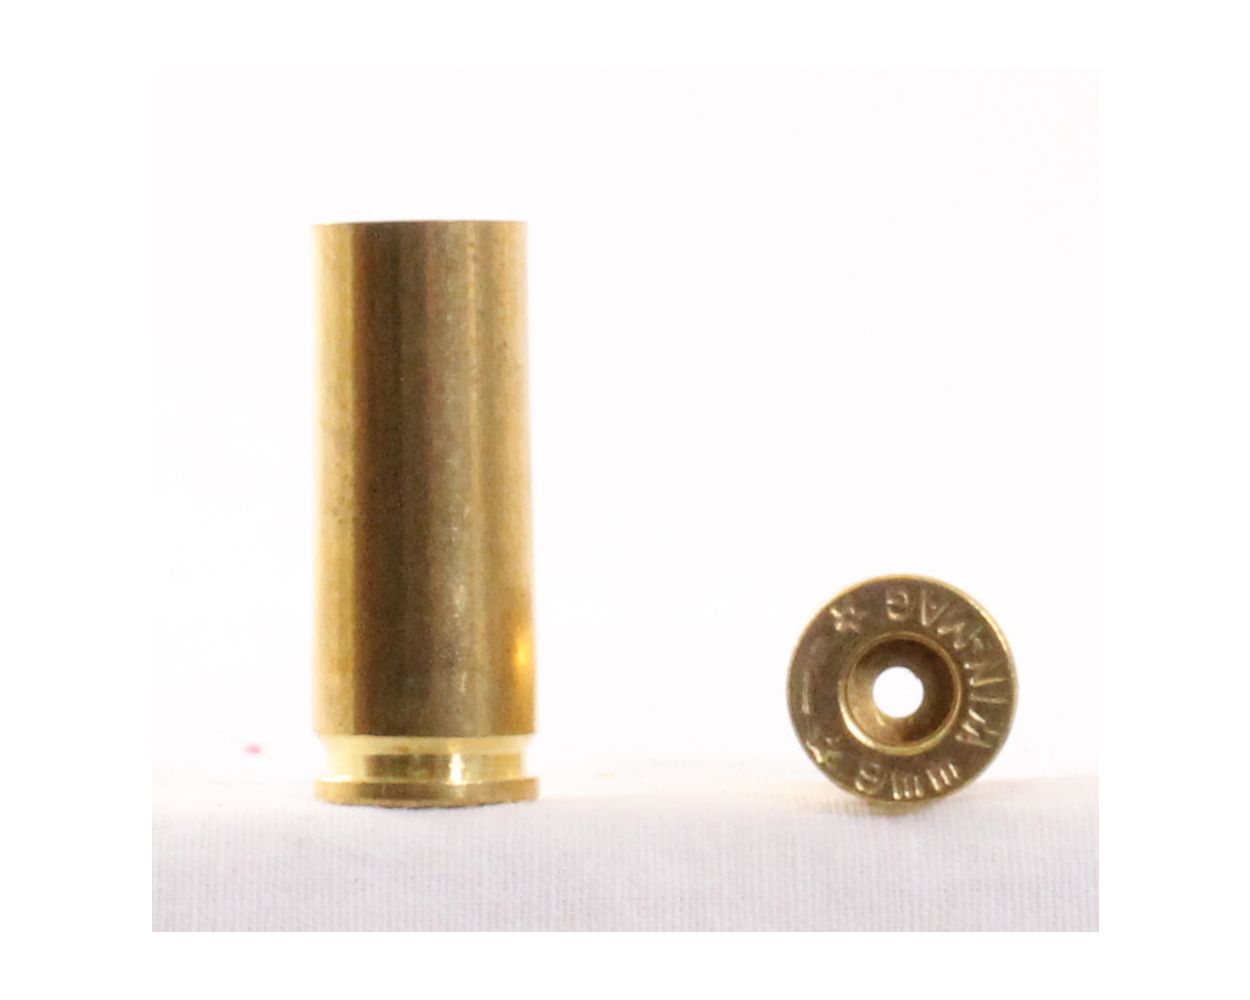 9mm Mauser Pistol Reformed Brass Cases*